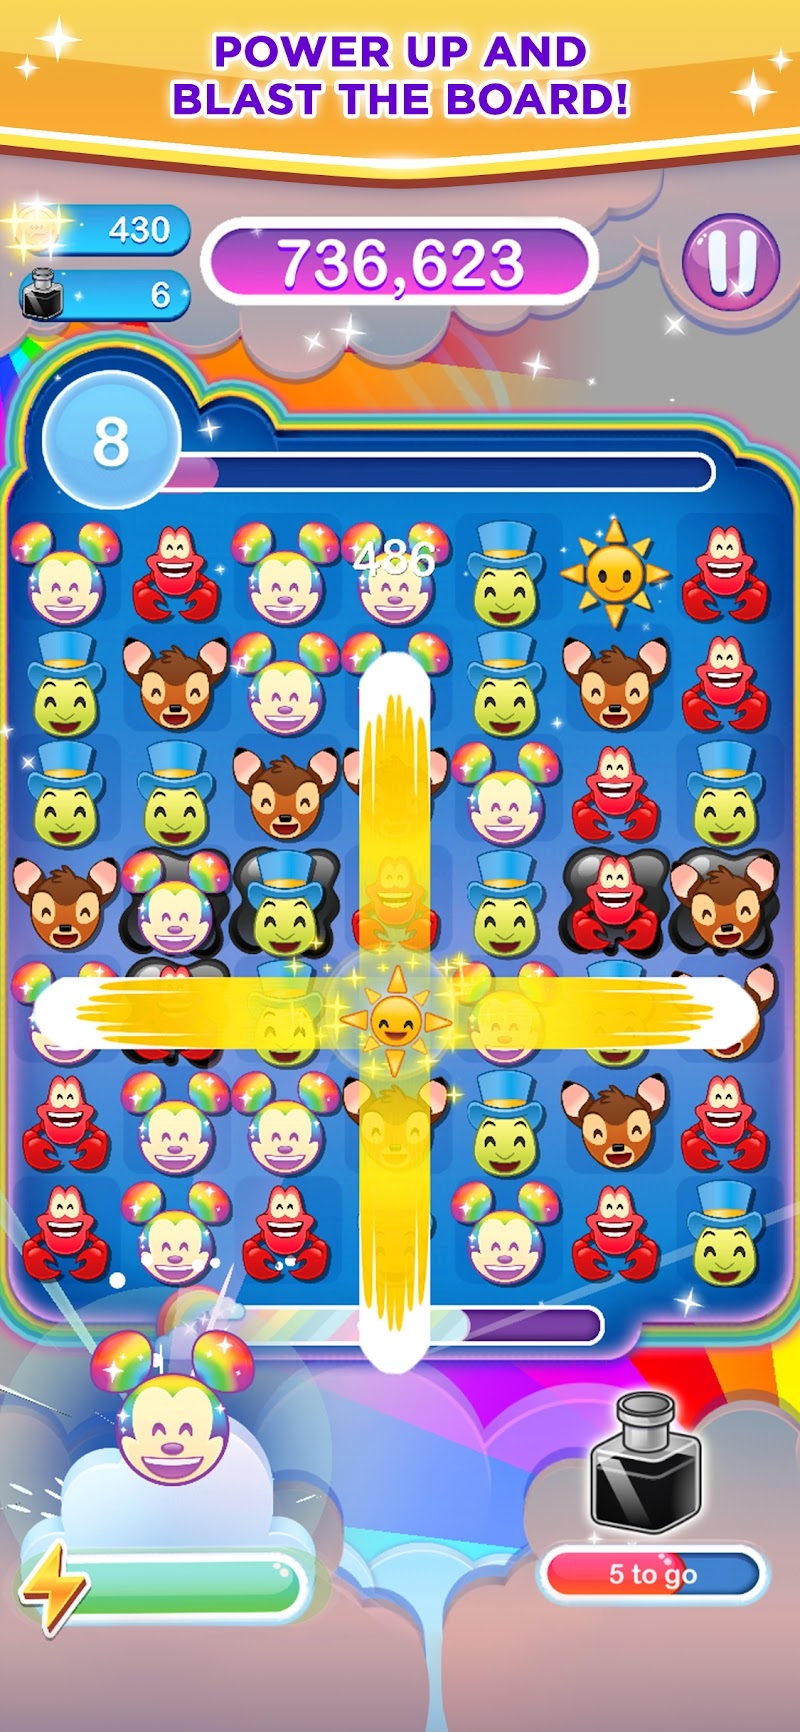 Disney Emoji Blitz - Disney Match 3 Puzzle Games